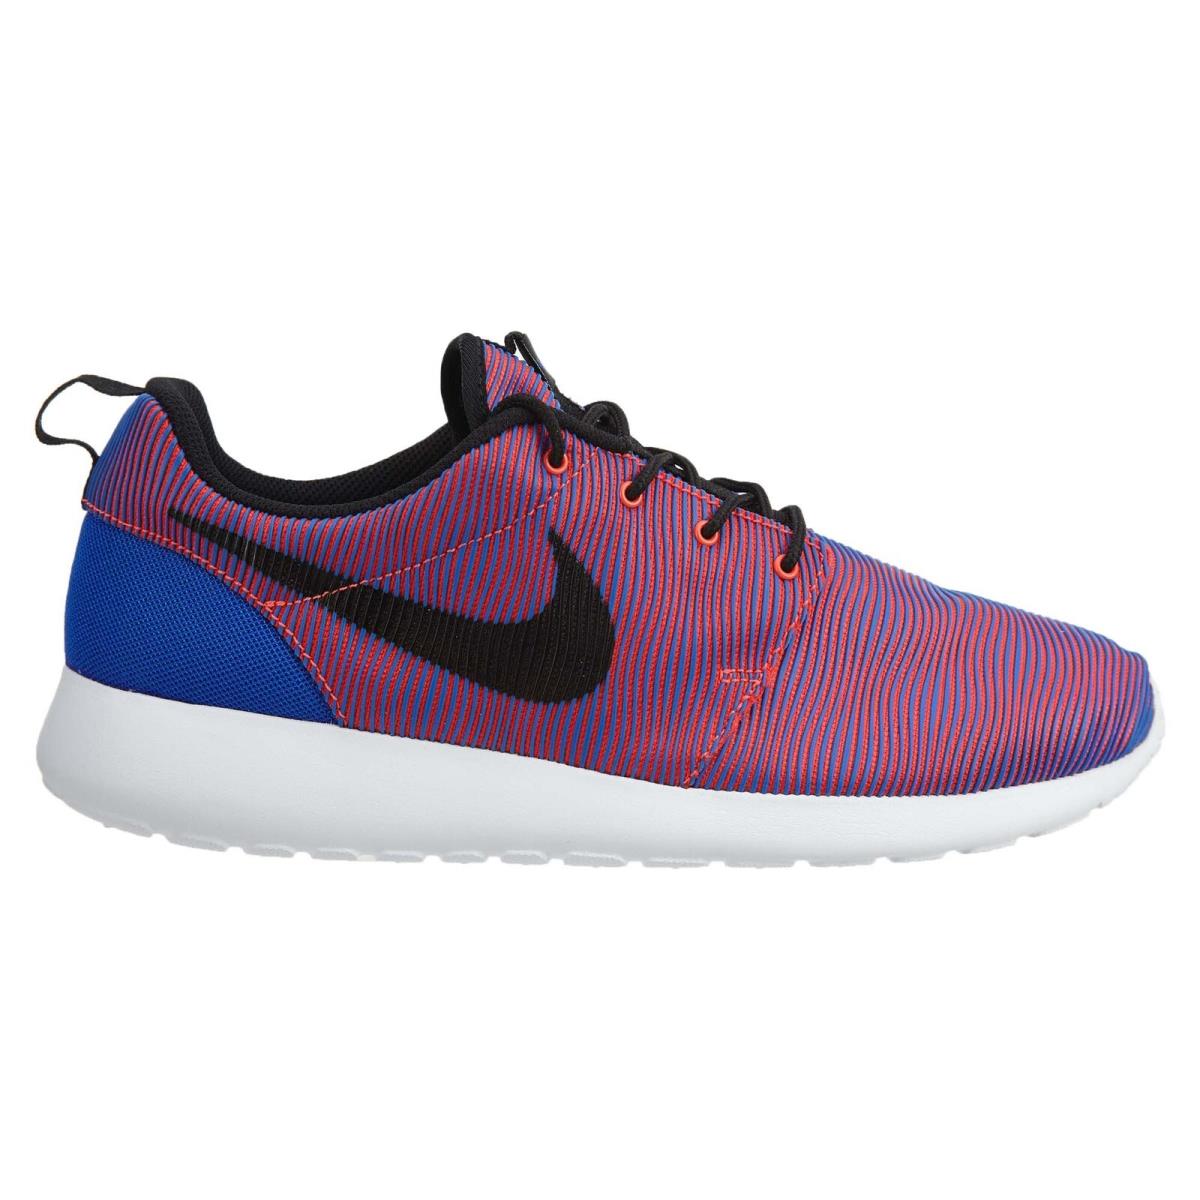 Nike Roshe One Premium Plus Mens 807611-407 Blue Crimson Running Shoes Size 7.5